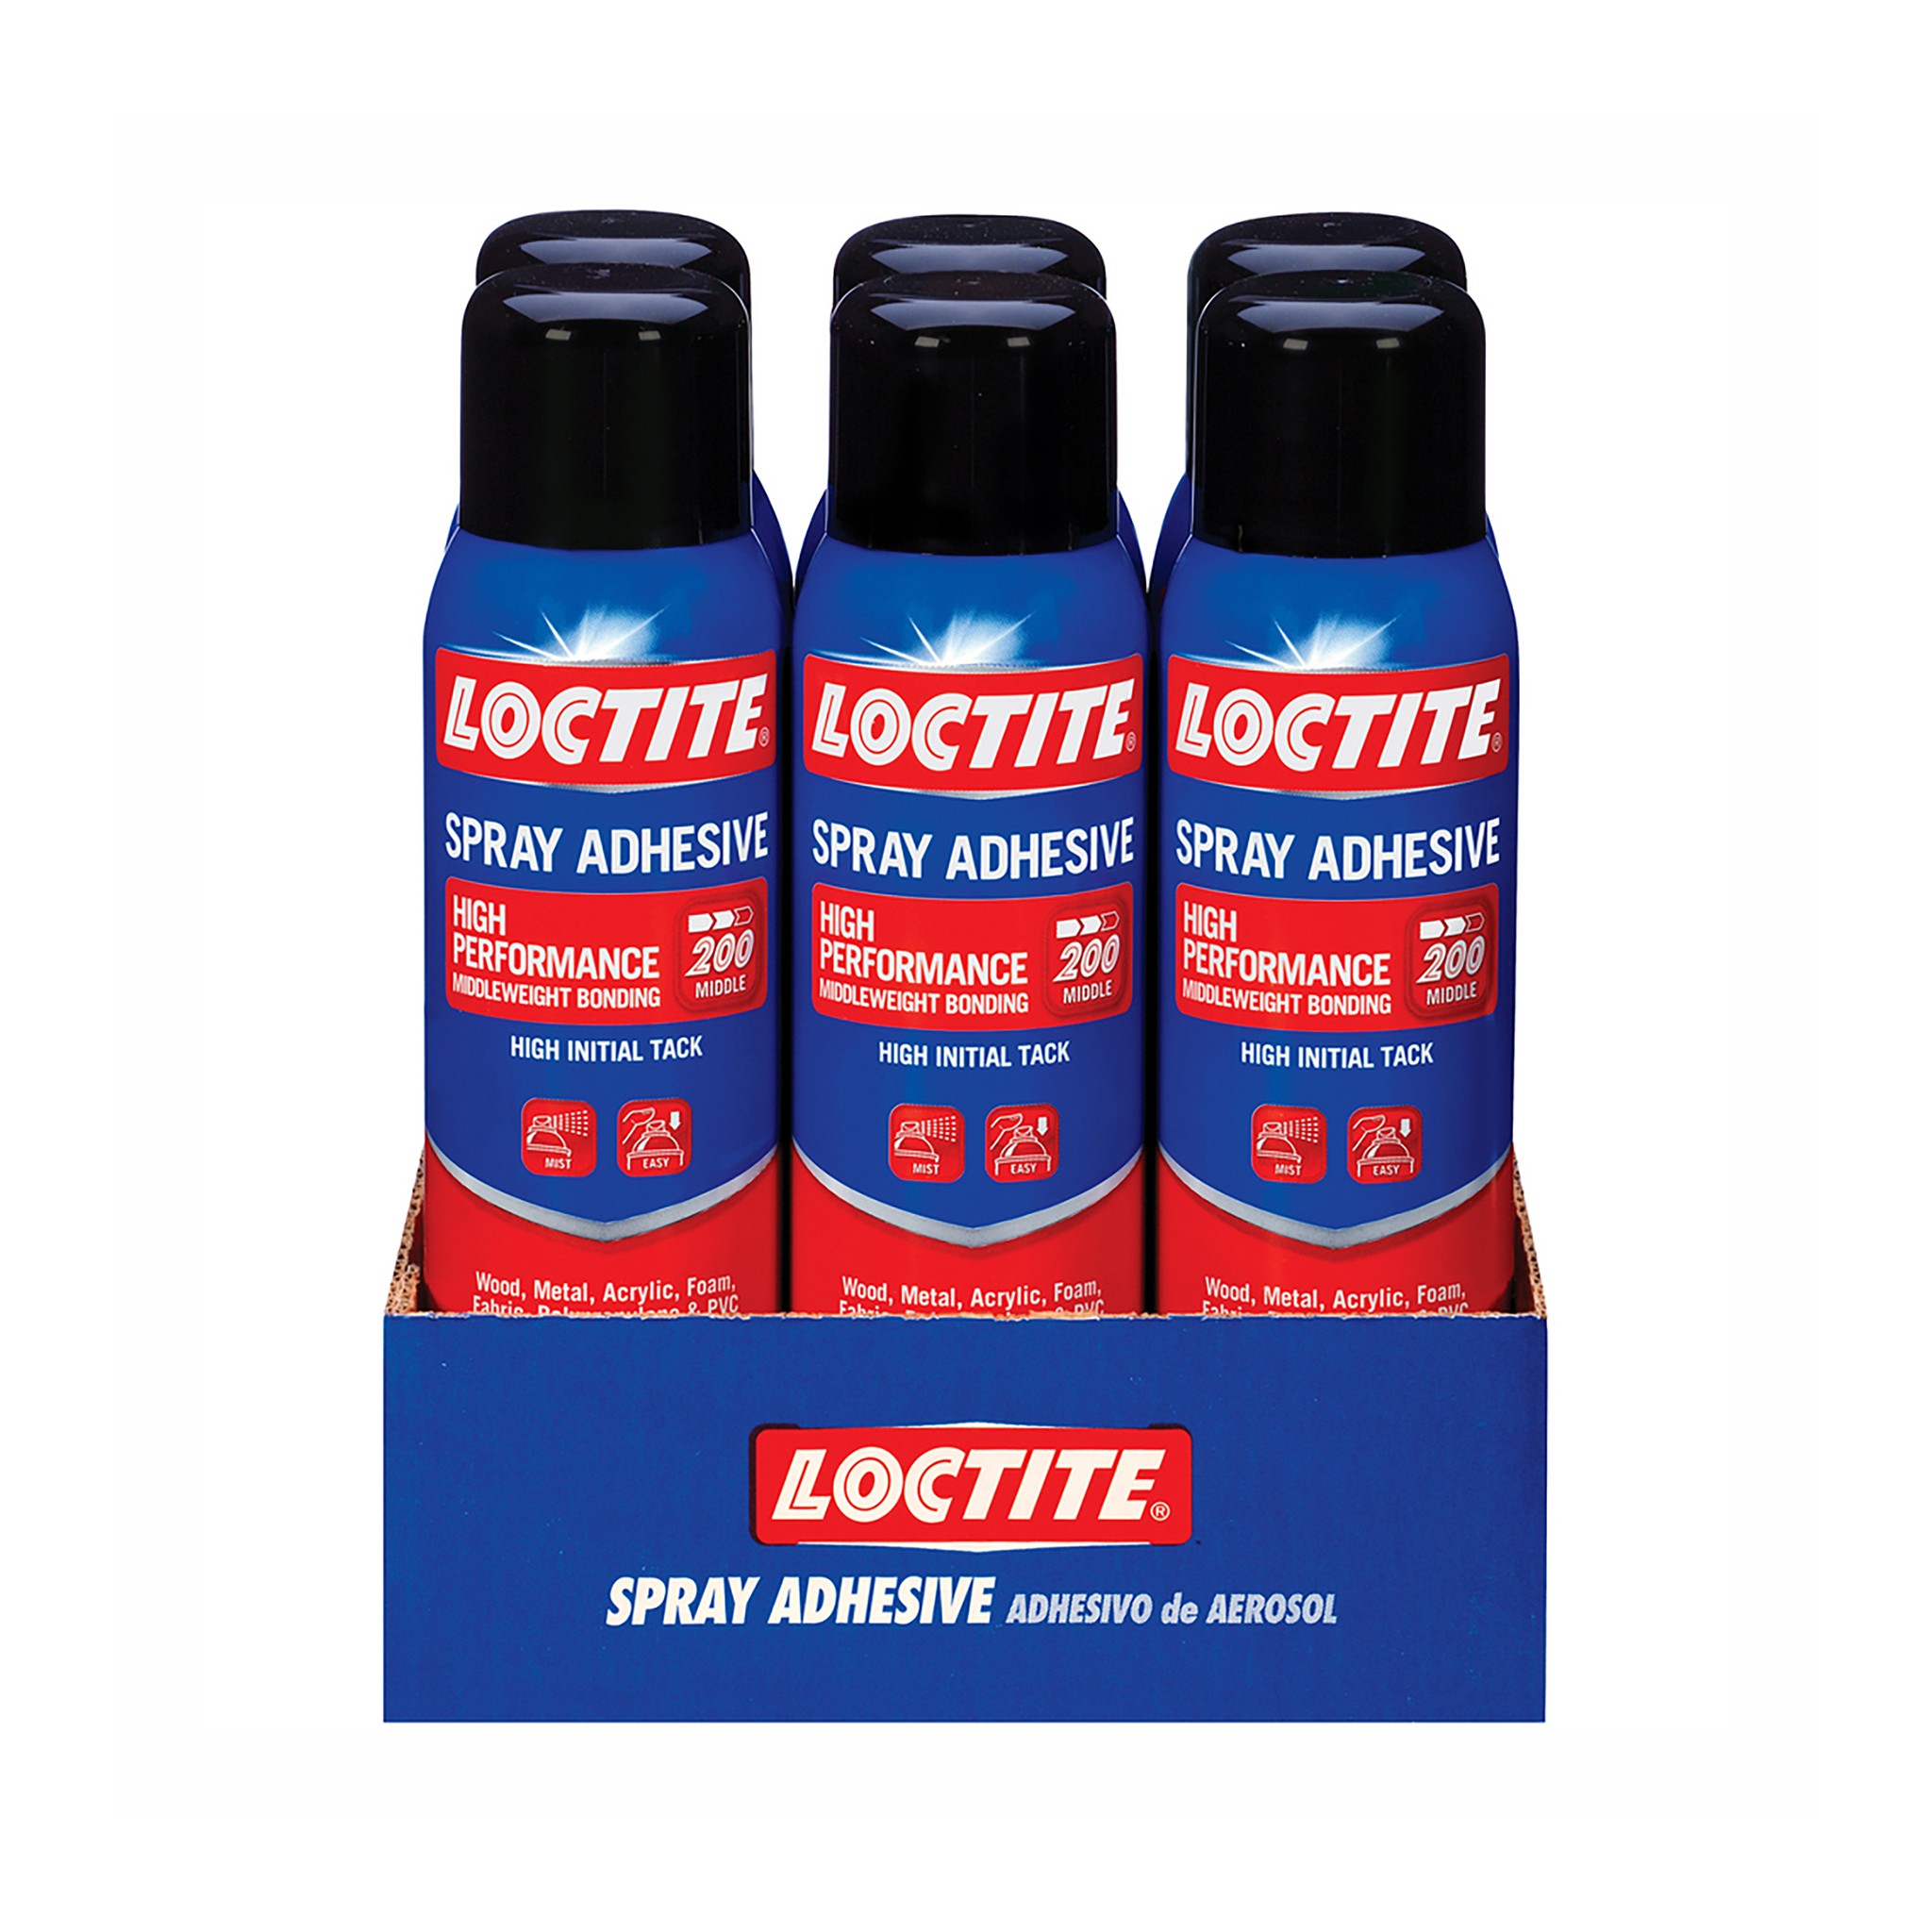 Loctite Super Glue Tube 13.5 oz.